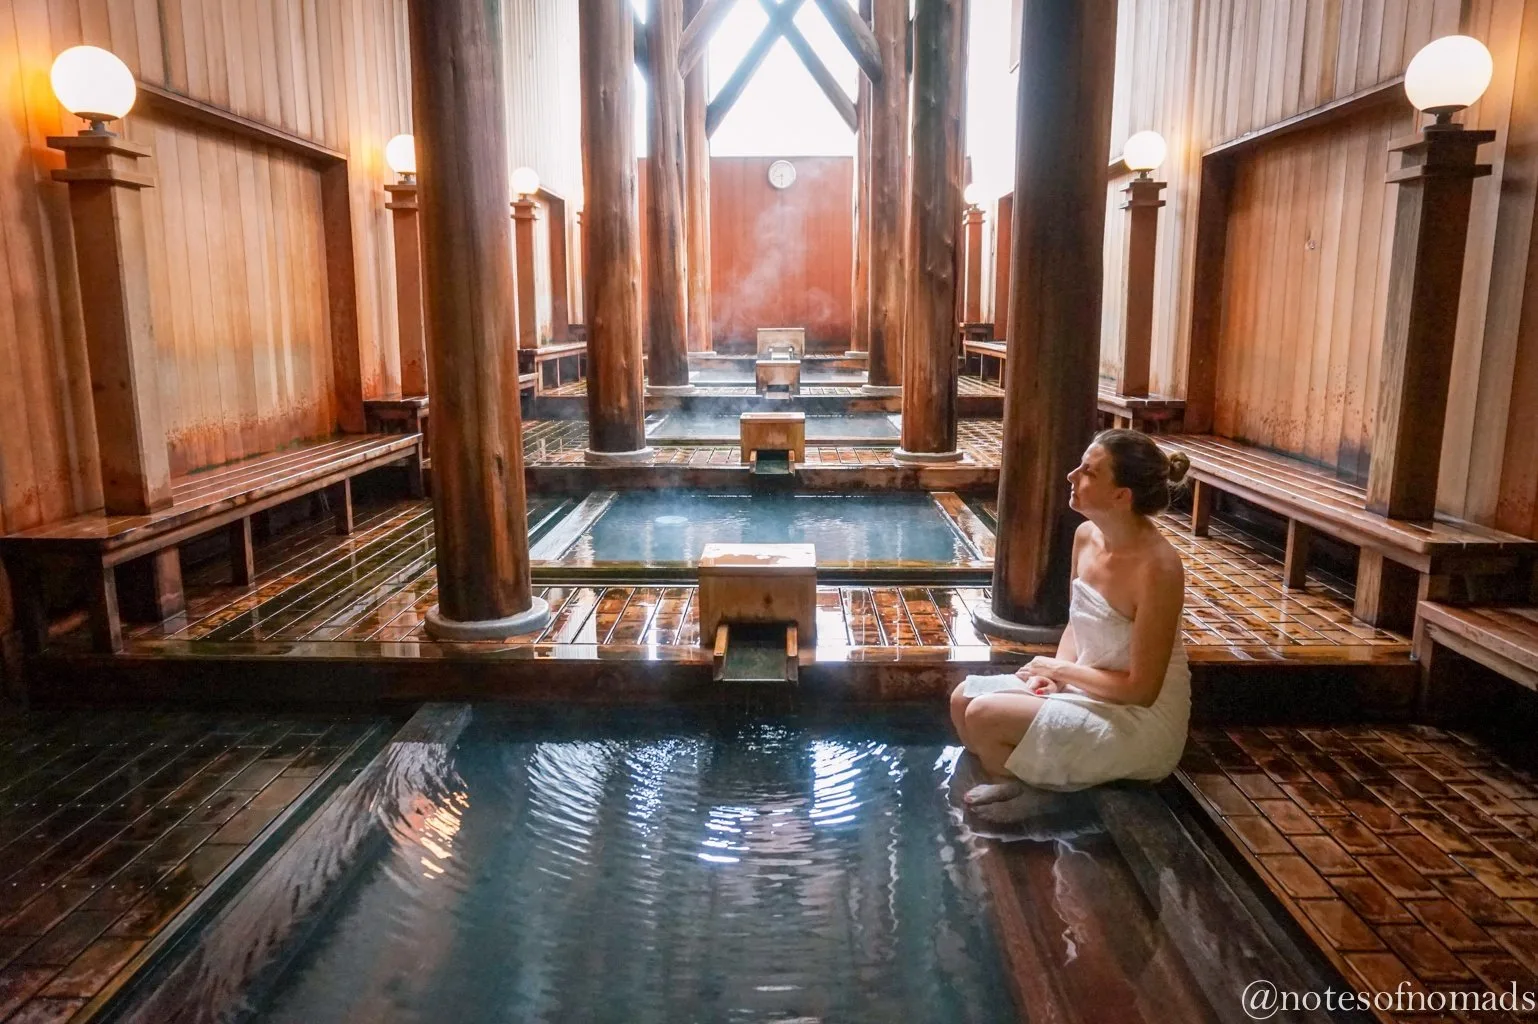 dan malkowski recommends japanese public bath video pic